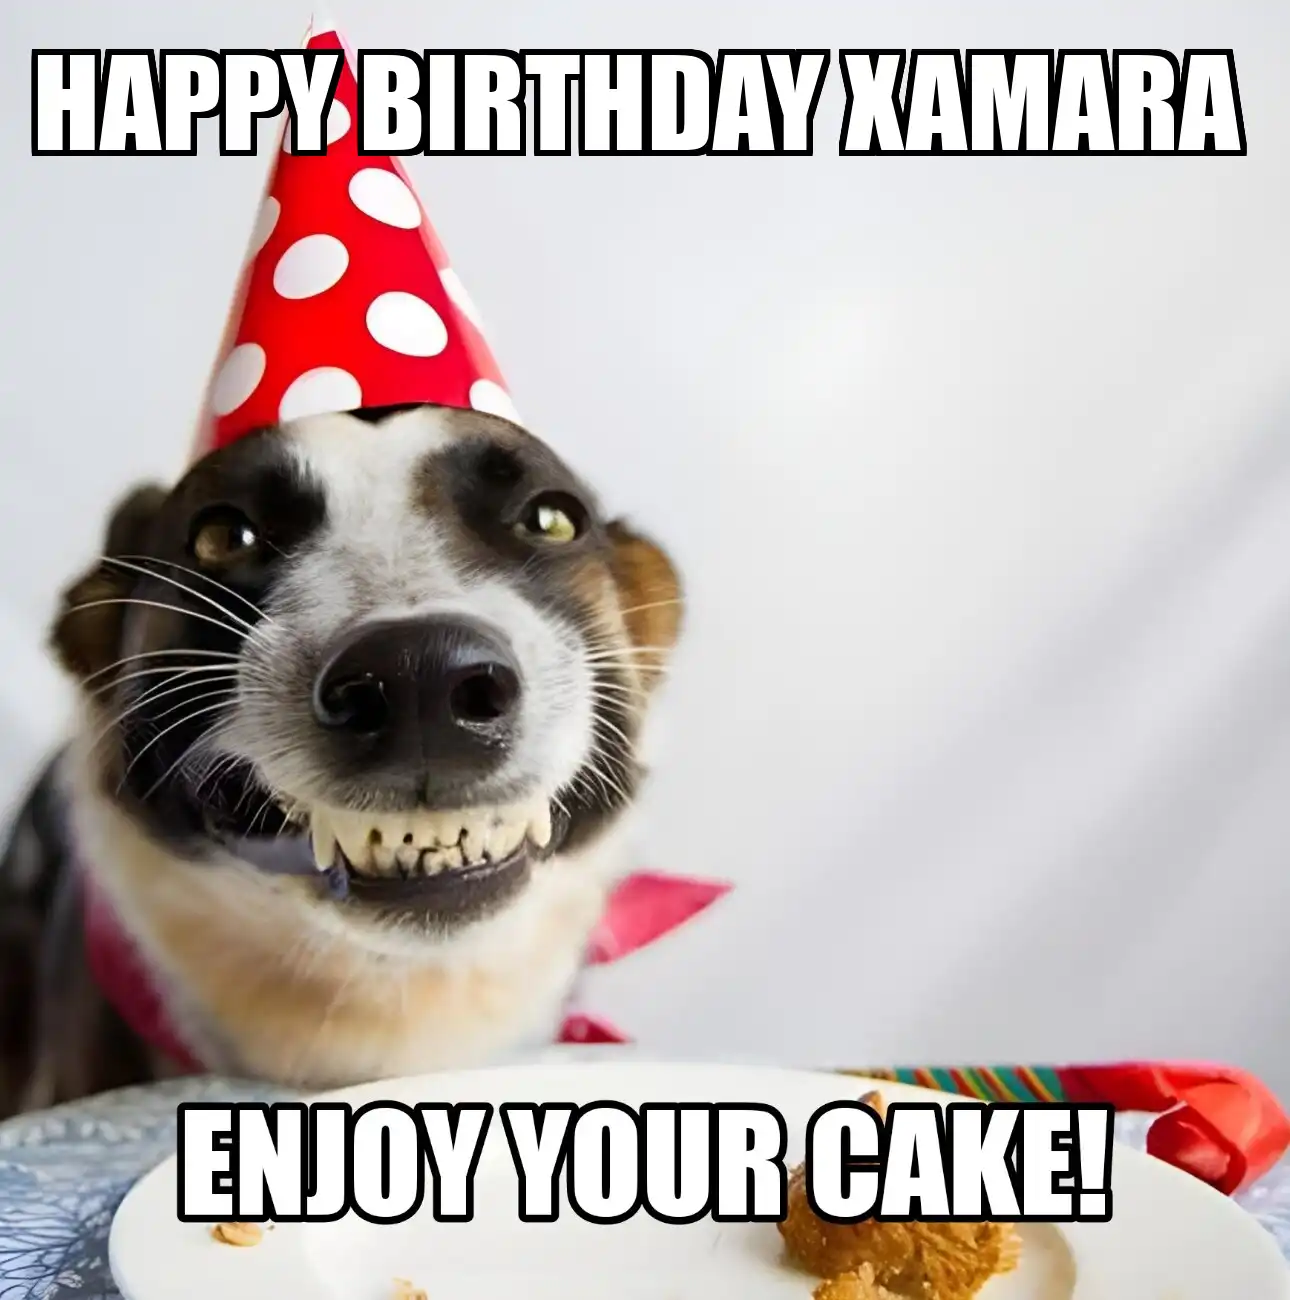 Happy Birthday Xamara Enjoy Your Cake Dog Meme